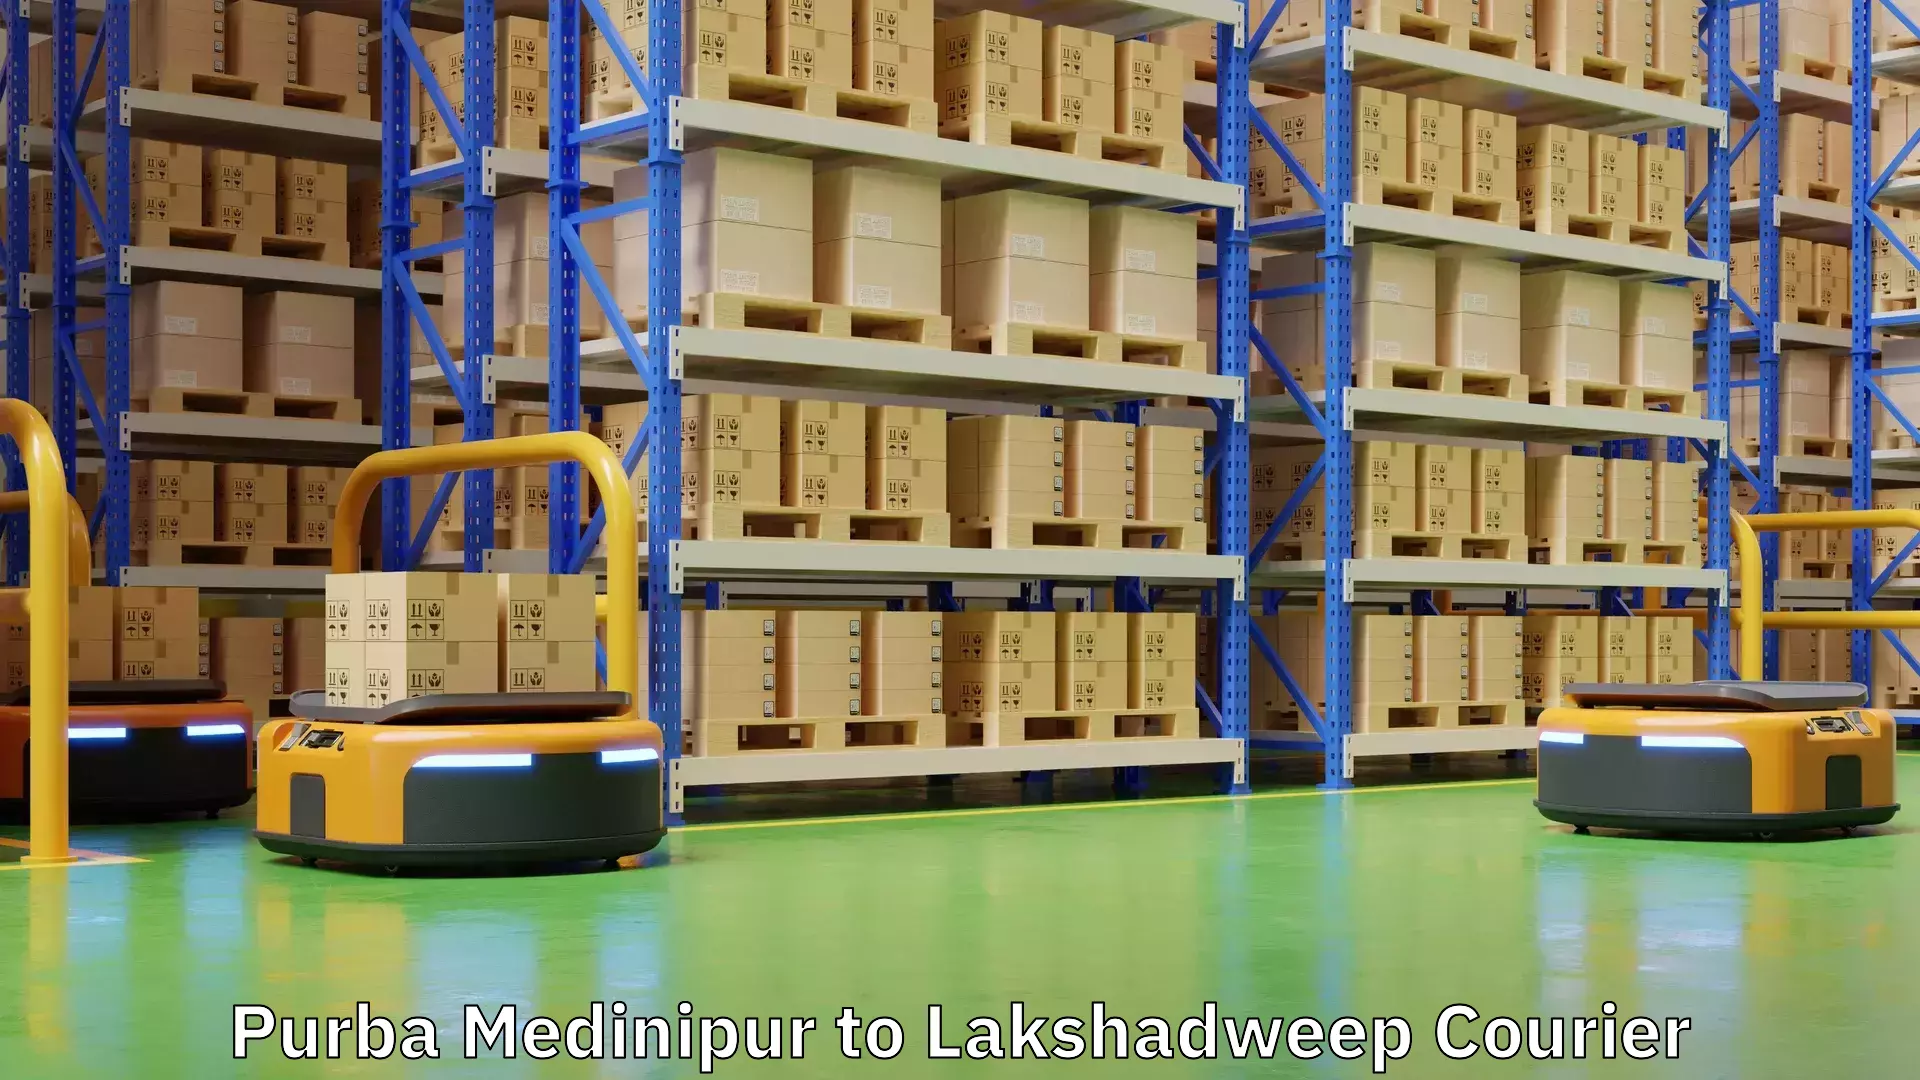 Logistics service provider Purba Medinipur to Lakshadweep